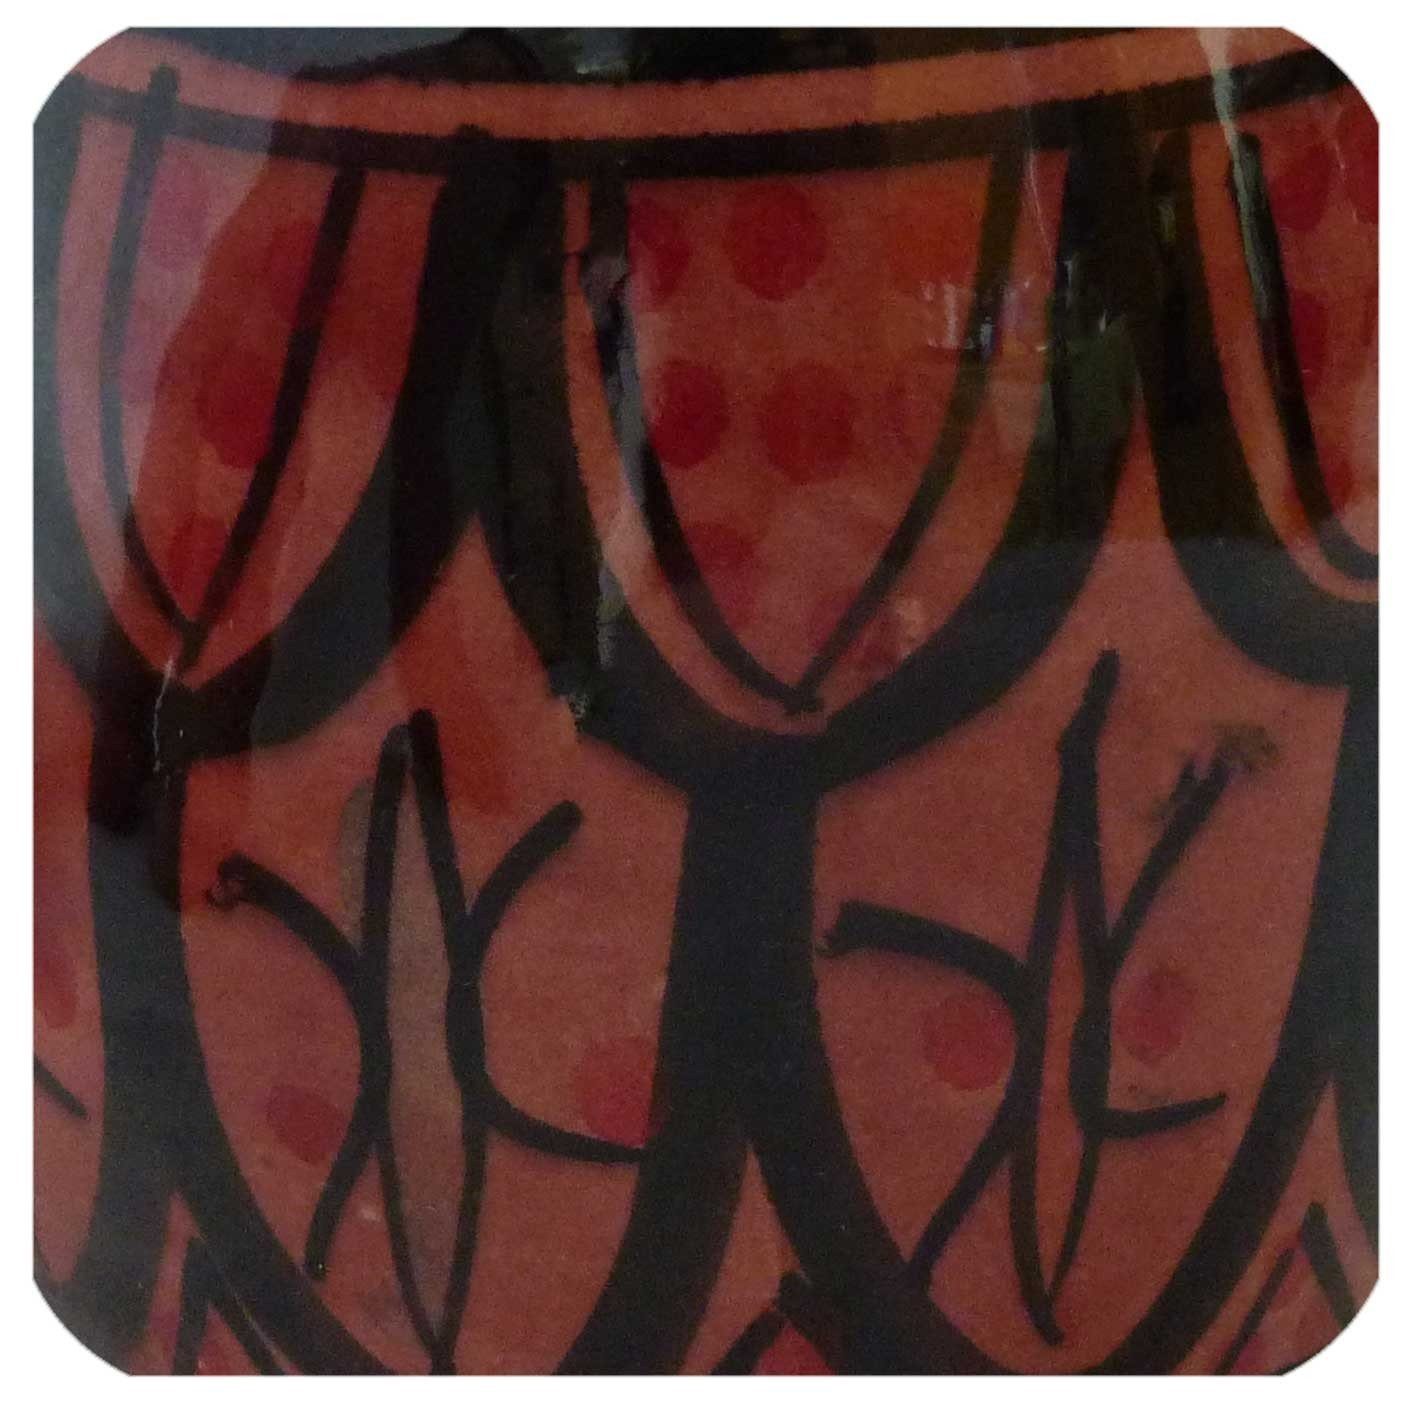 SIMANDRA Tasse Keramiktasse Rot handarbeit Groß, Keramik